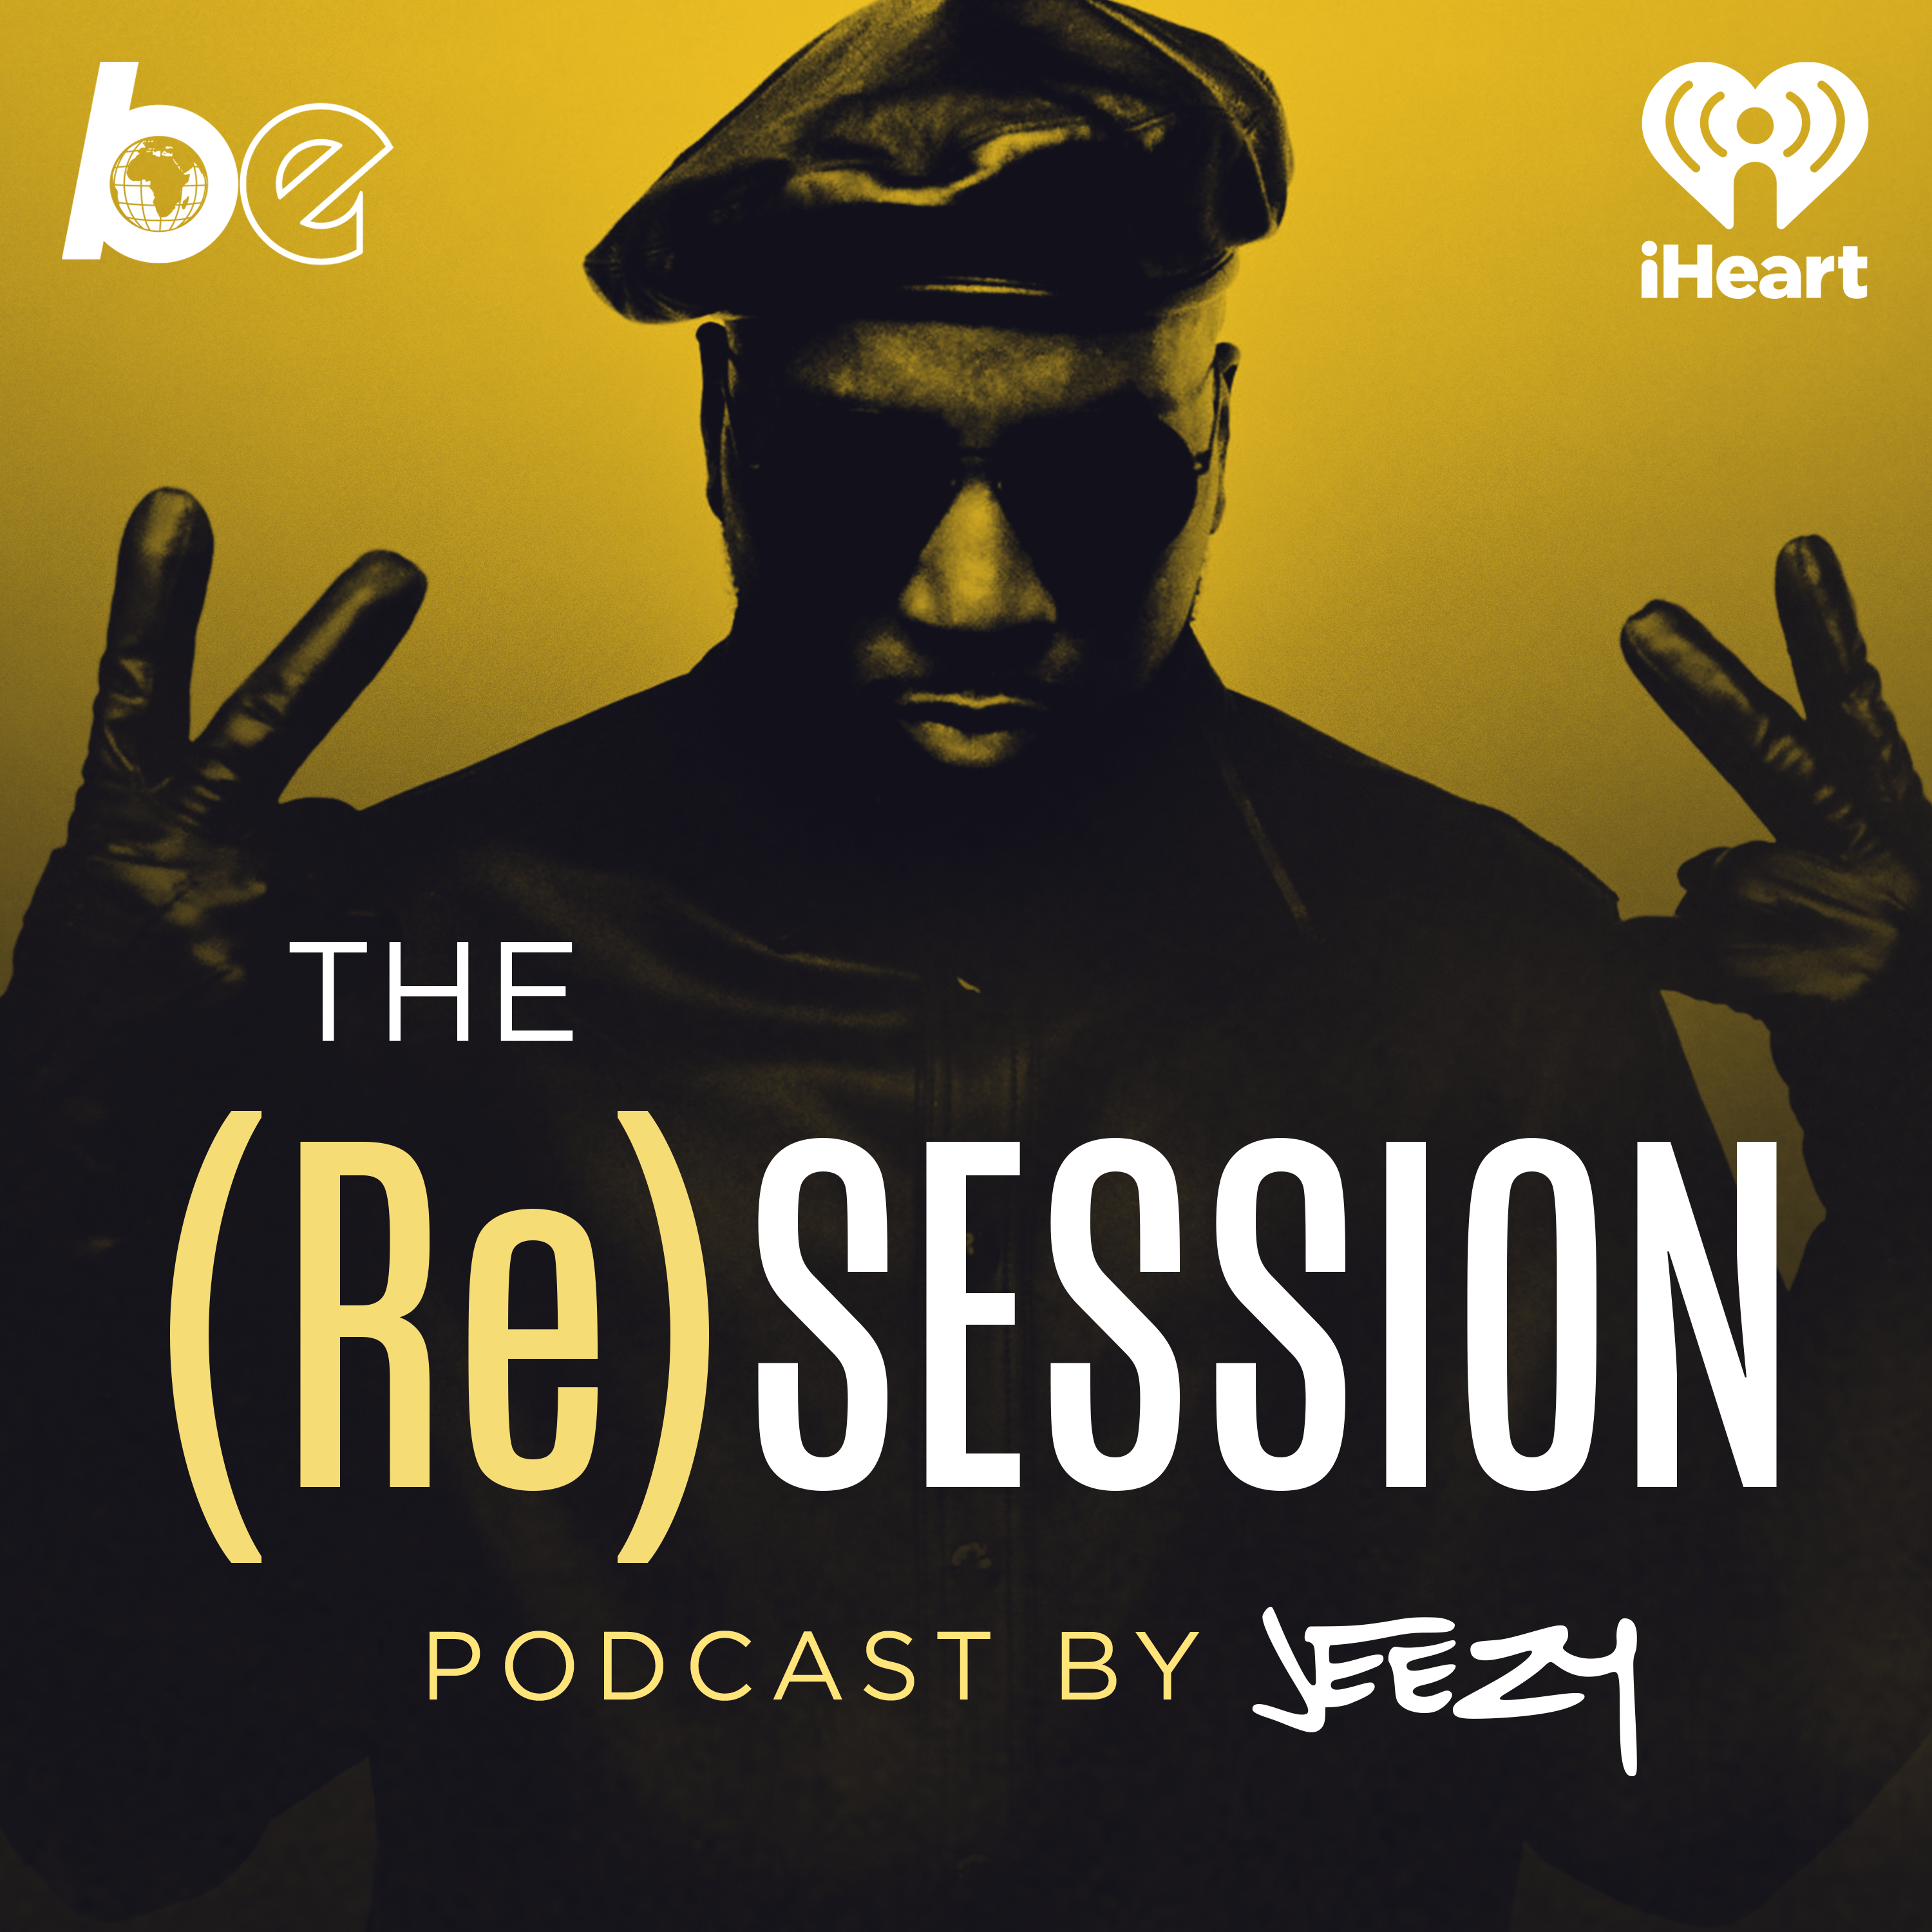 Van Jones | Ep 6 | (Re)Session Podcast by Jeezy